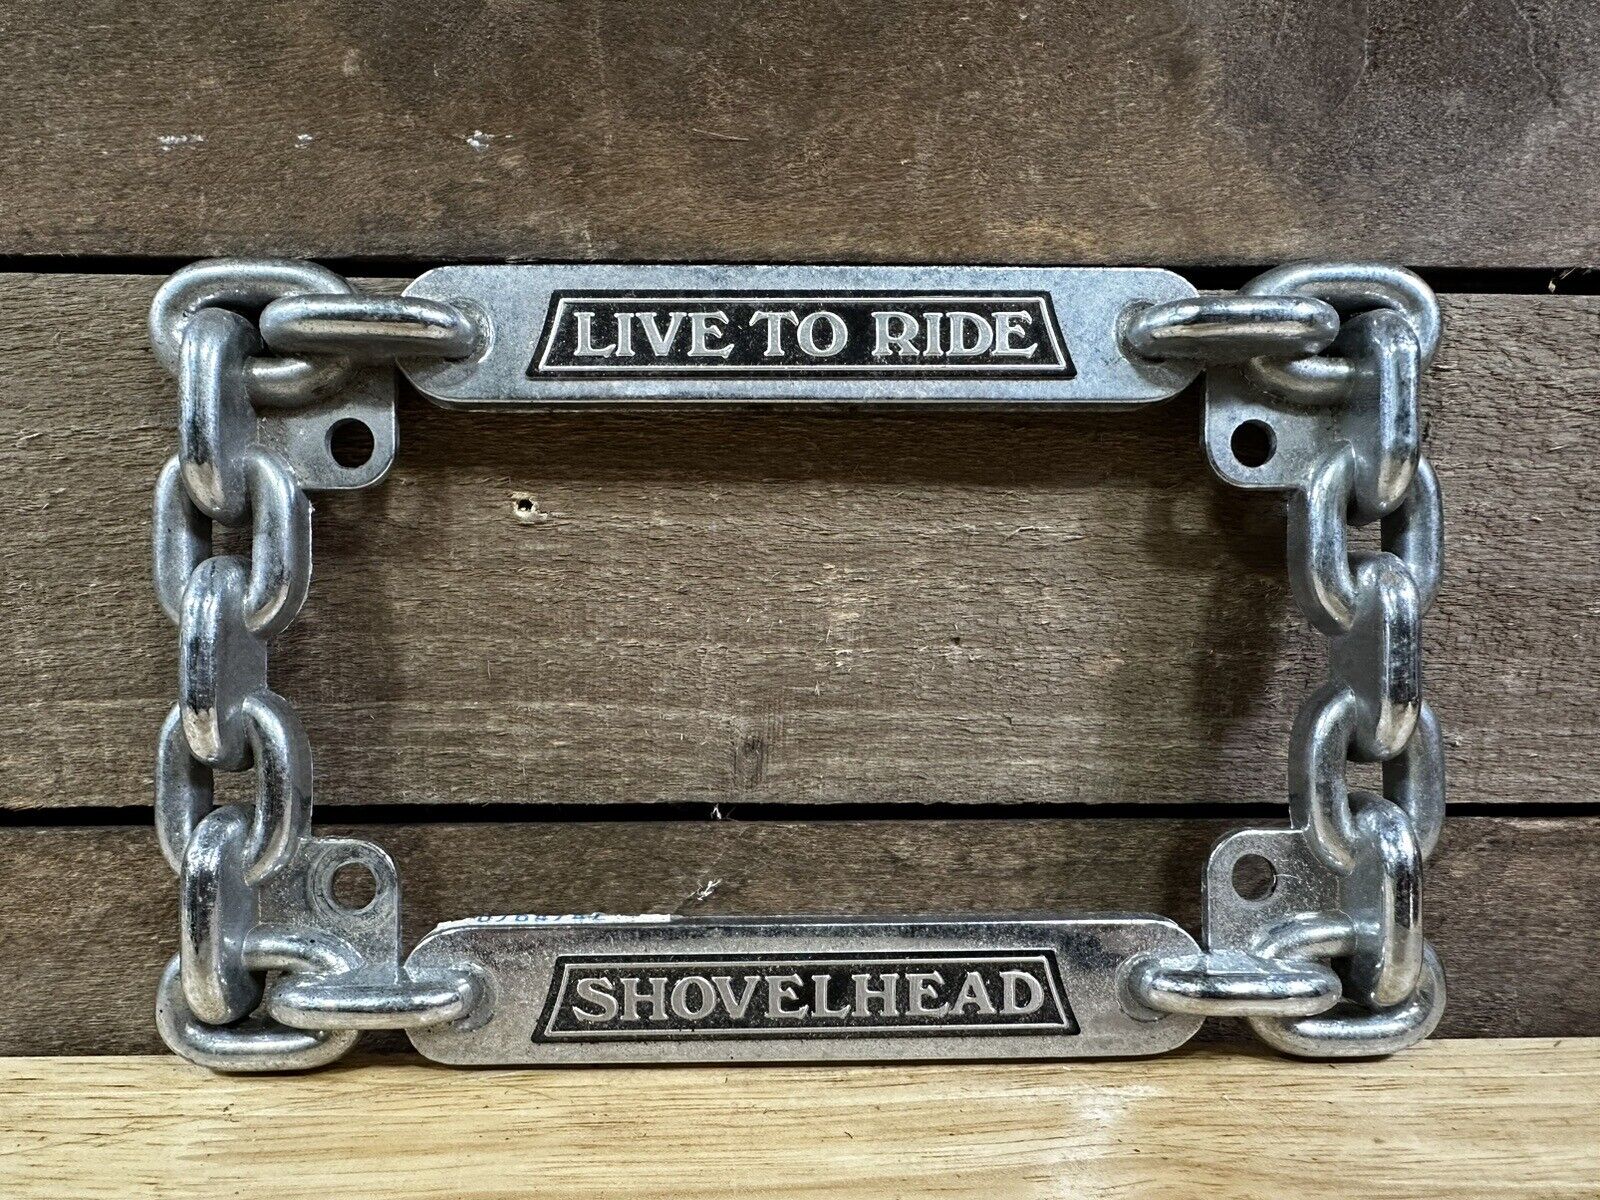 Vintage Metal “Shovelhead” Live To Ride Chain Link Plate Holder